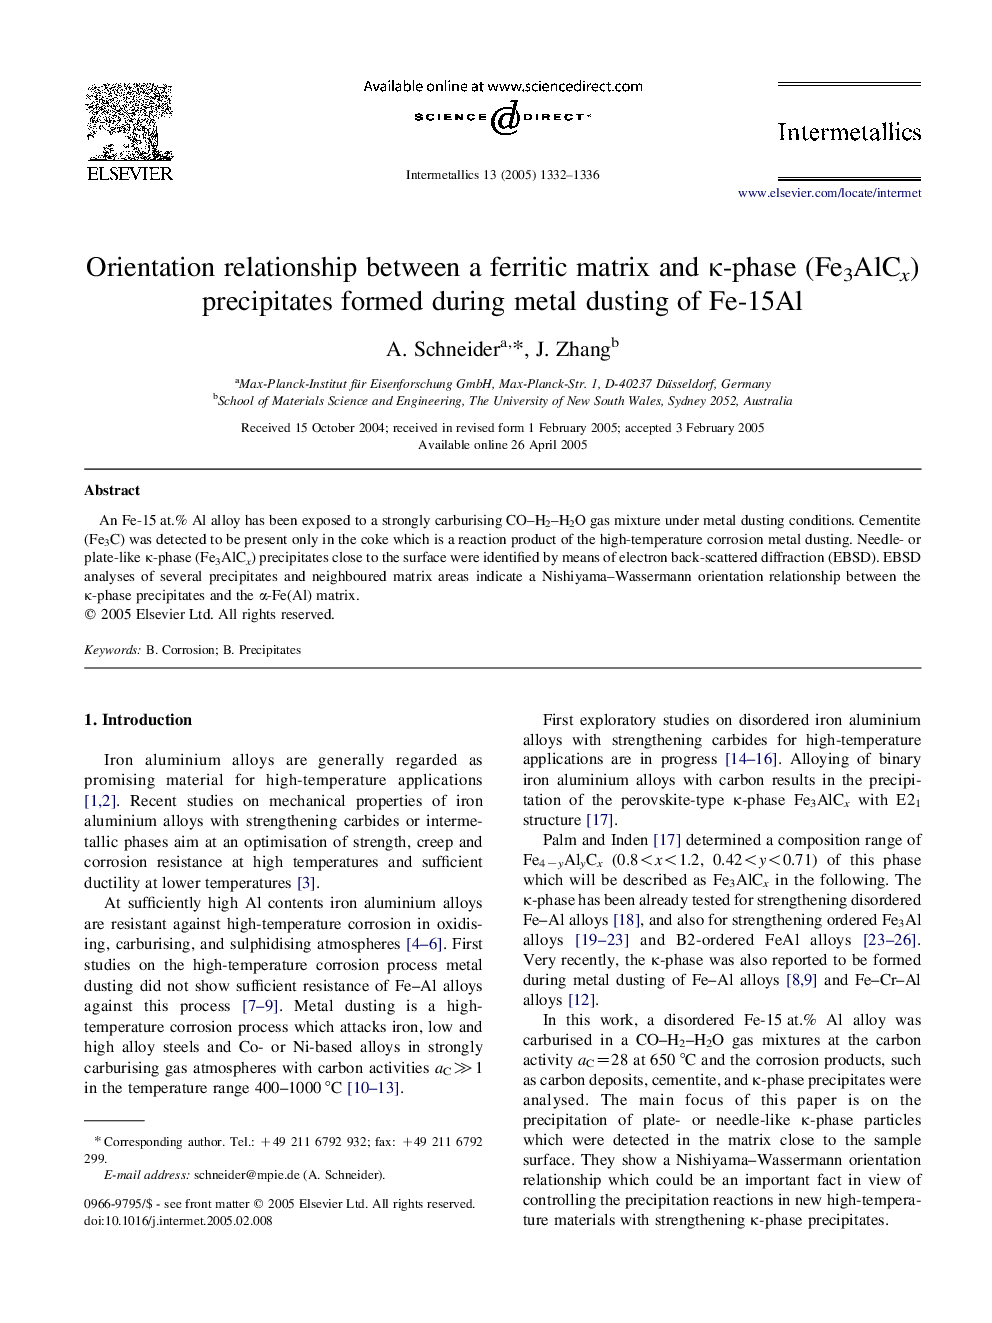 Orientation relationship between a ferritic matrix and Îº-phase (Fe3AlCx) precipitates formed during metal dusting of Fe-15Al